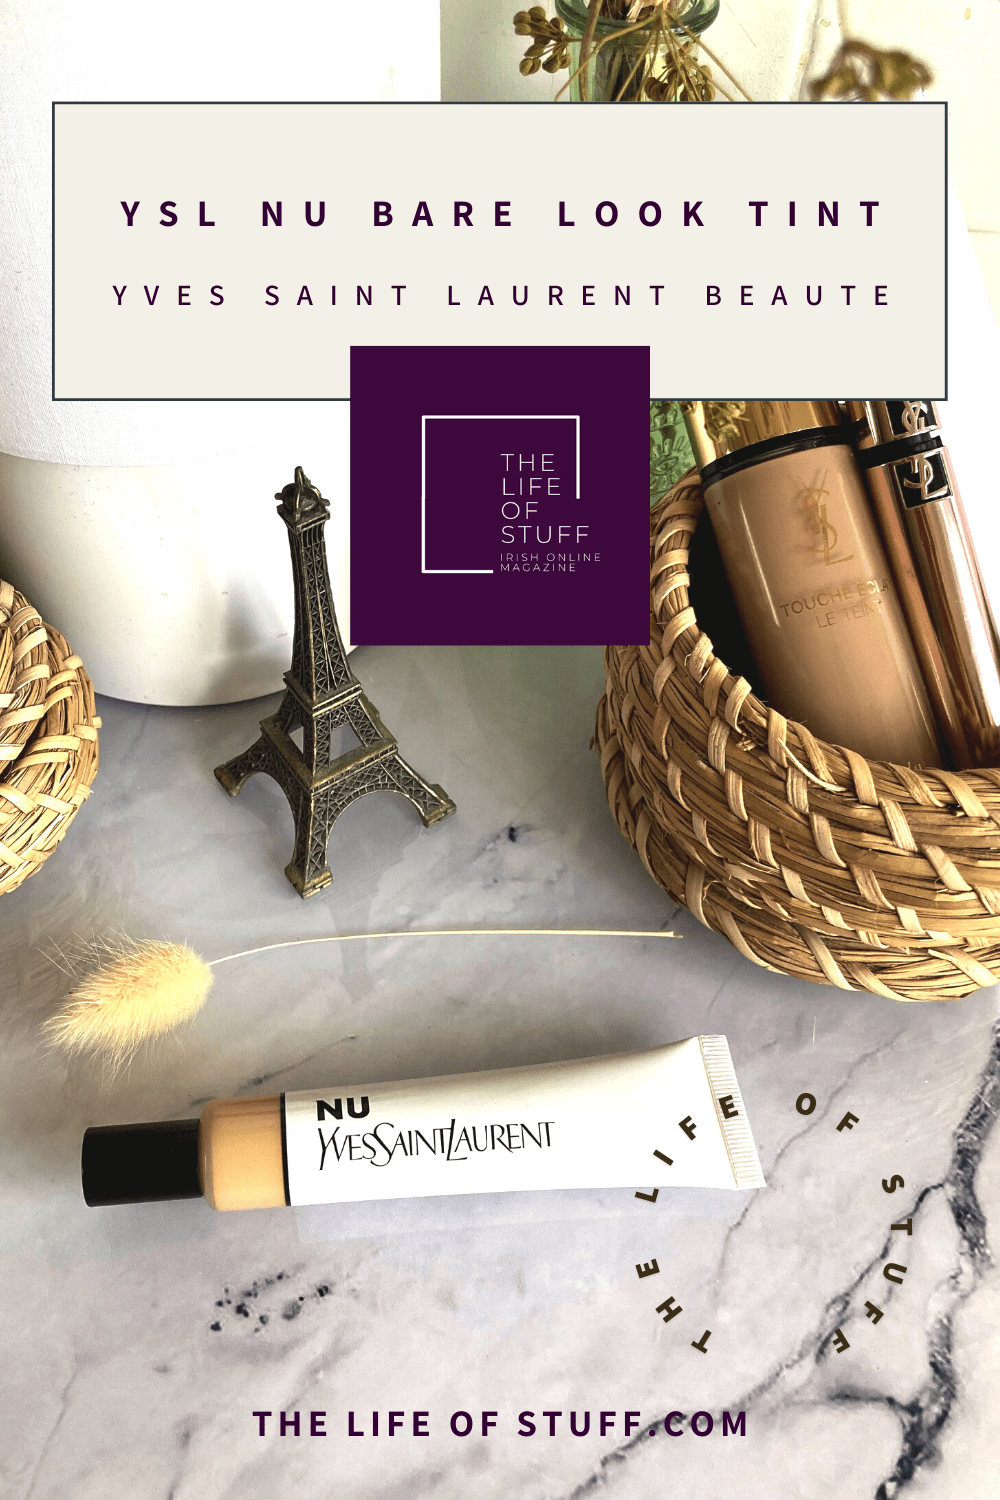 We Love YSL NU BARE LOOK TINT | Yves Saint Laurent Beauté - The Life of Stuff